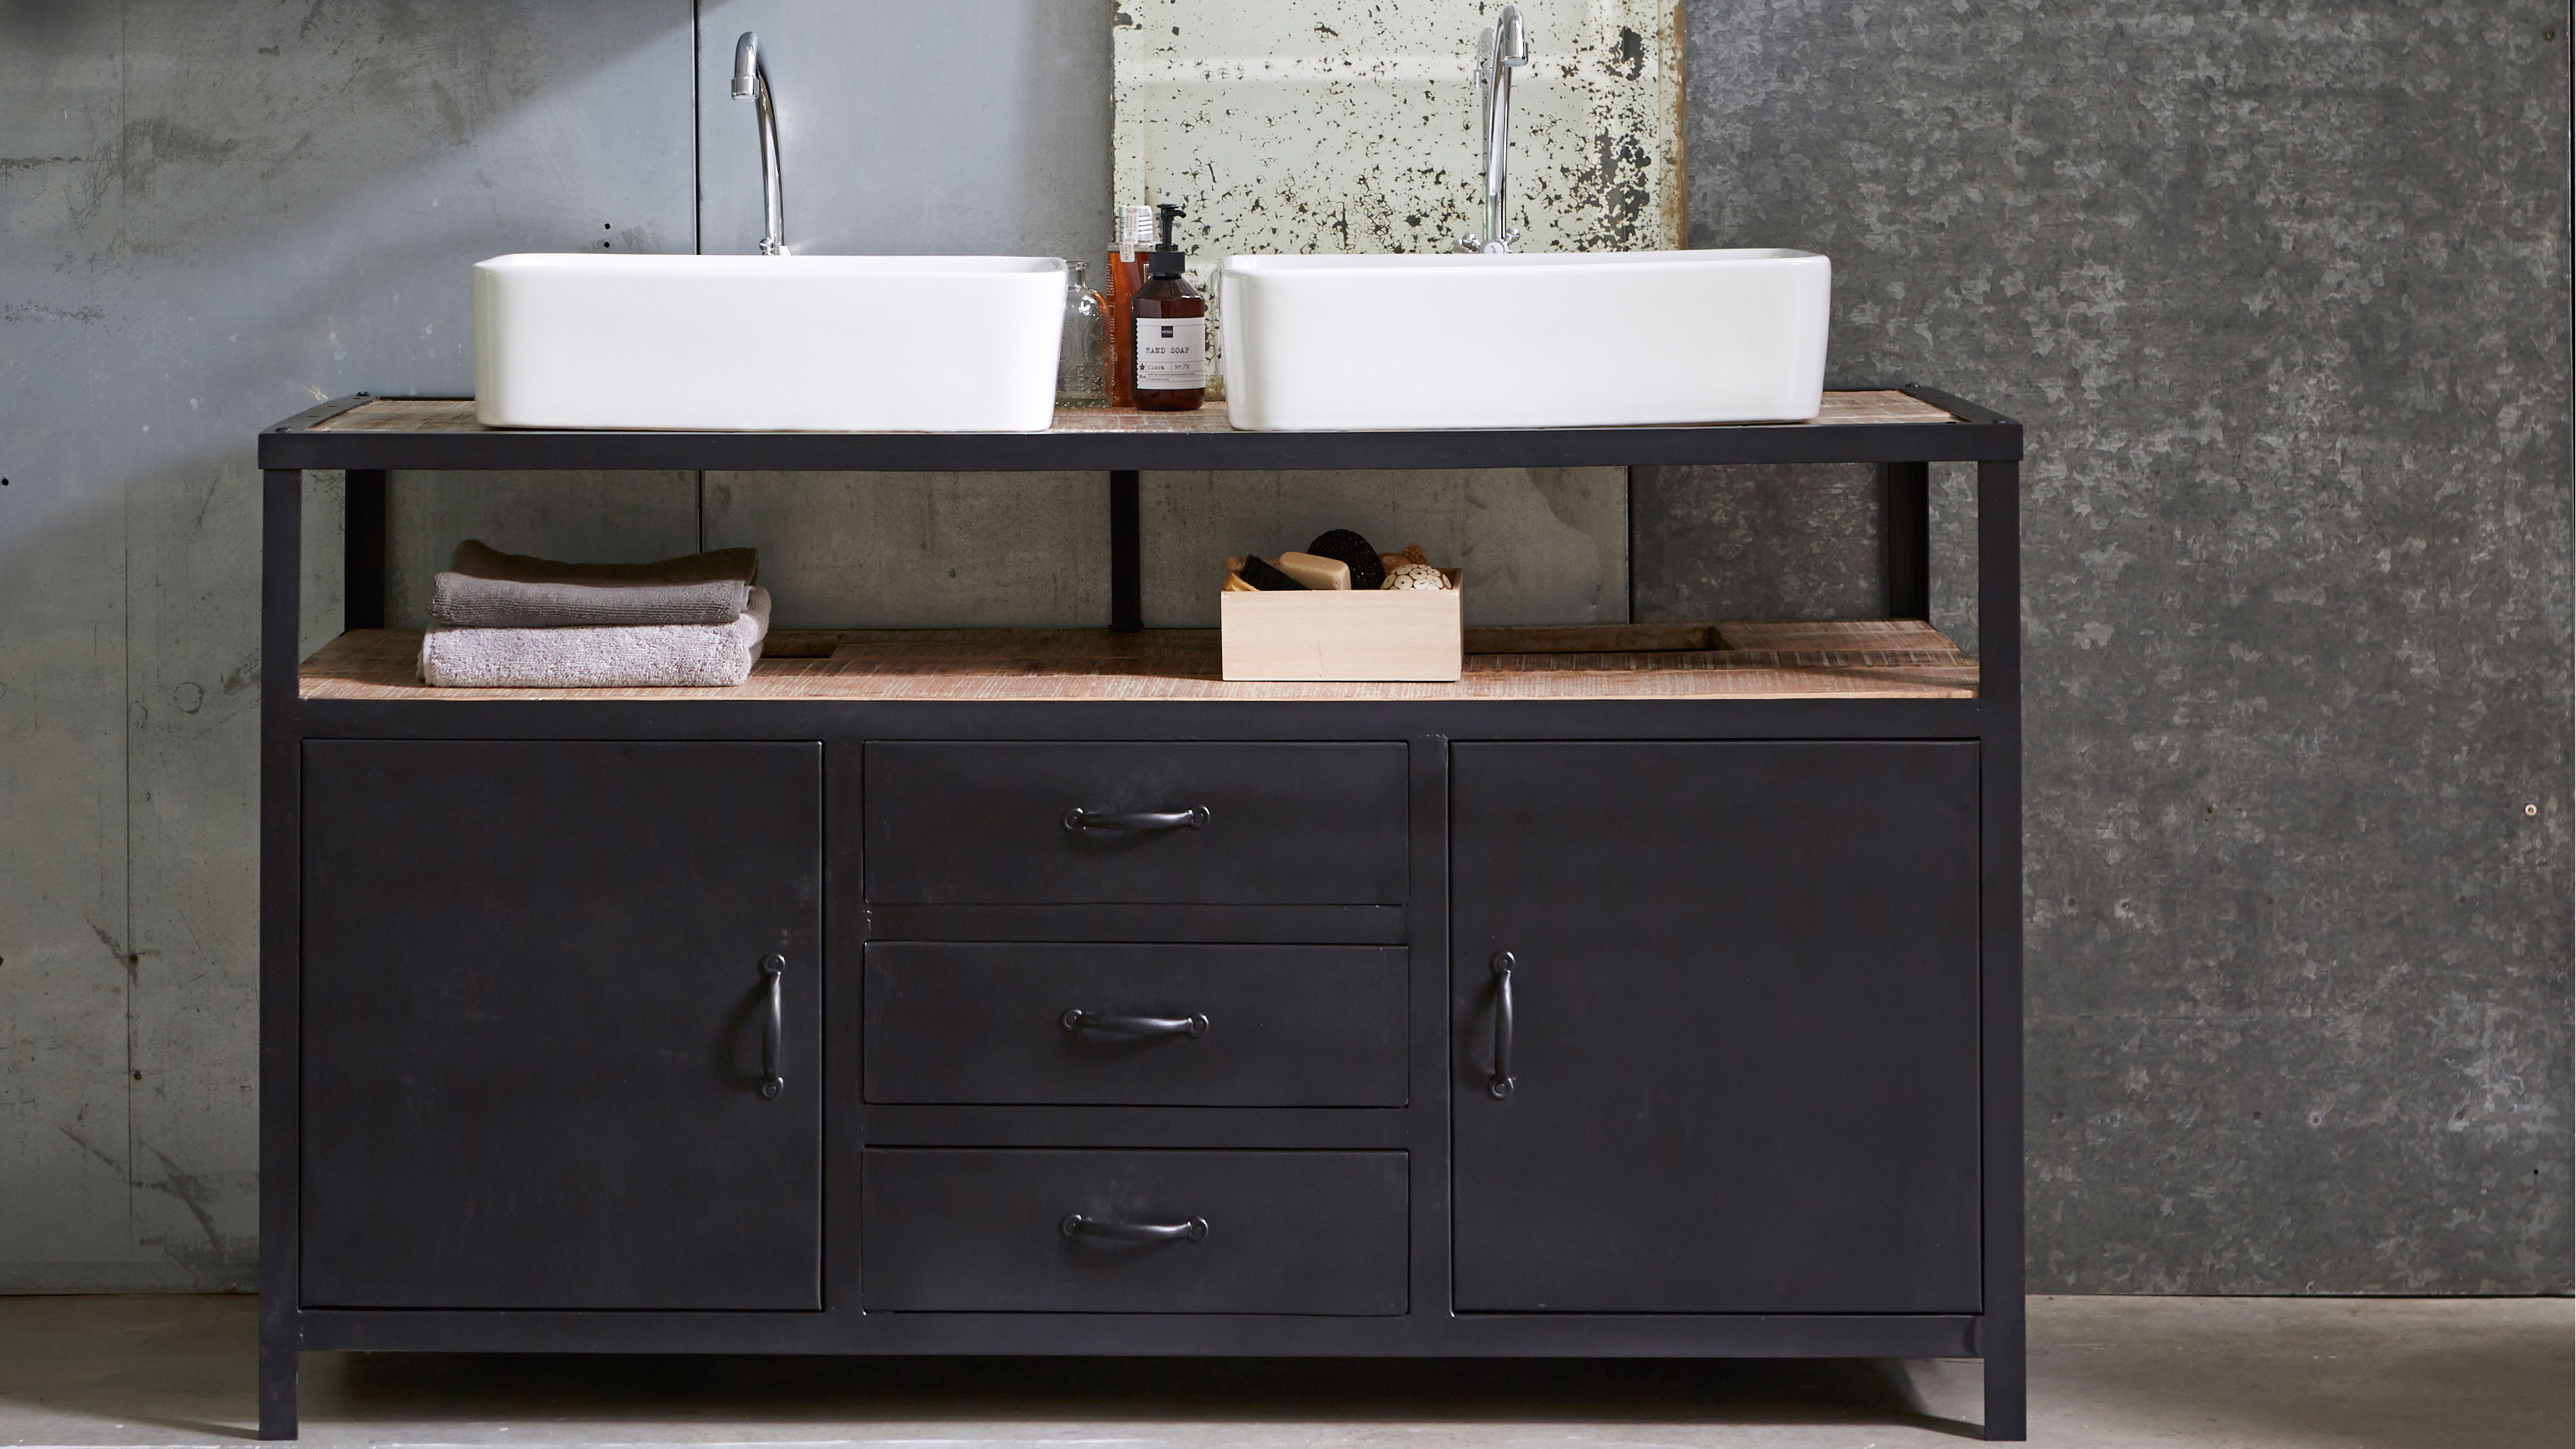 10 Of The Best Vanity Units Real Homes, Ikea Bathroom Vanity Units Freestanding